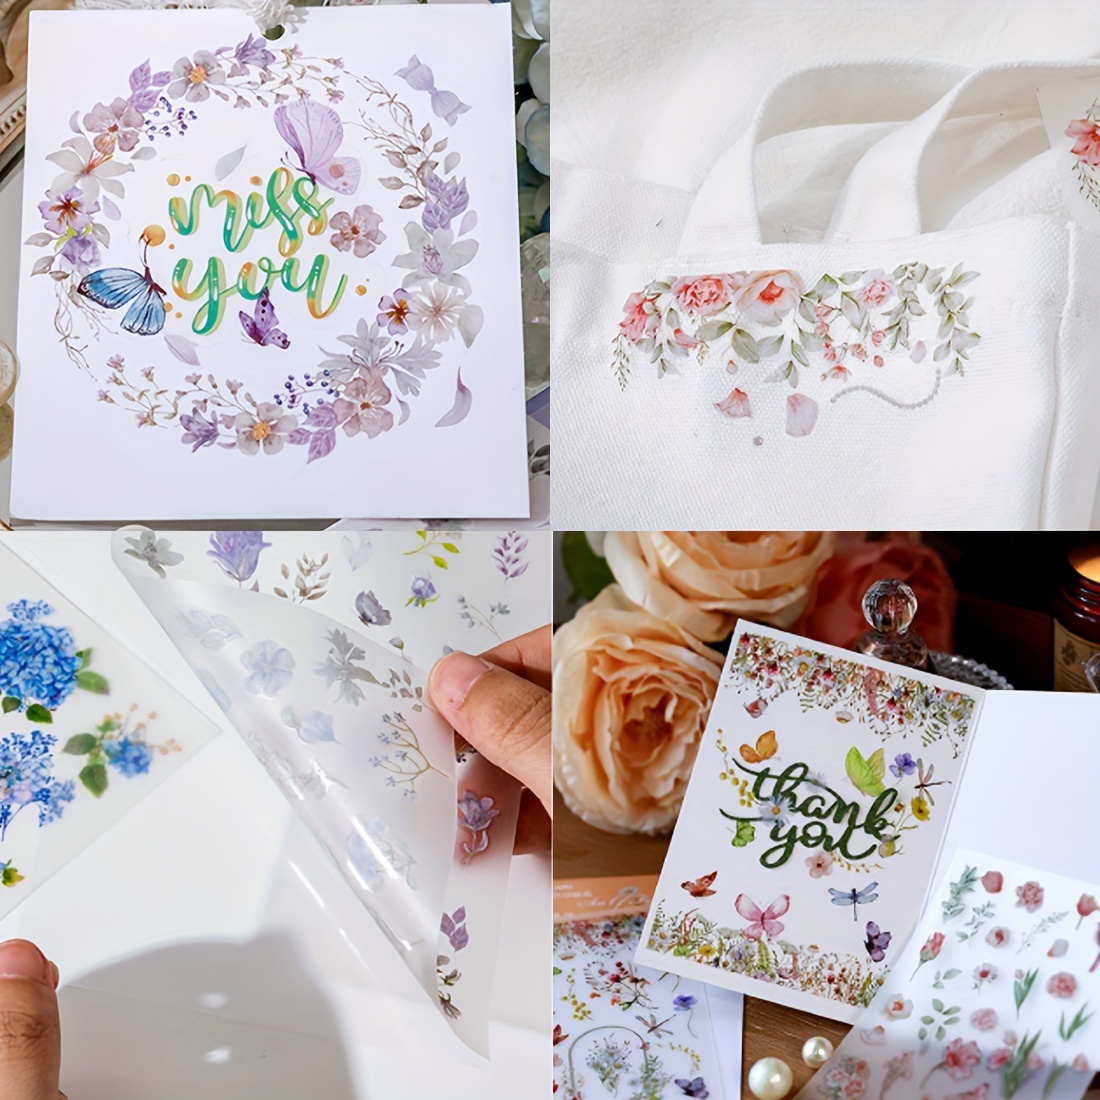 5 Pcs rub on transfers for crafts Flower Transfers Stickers Rub